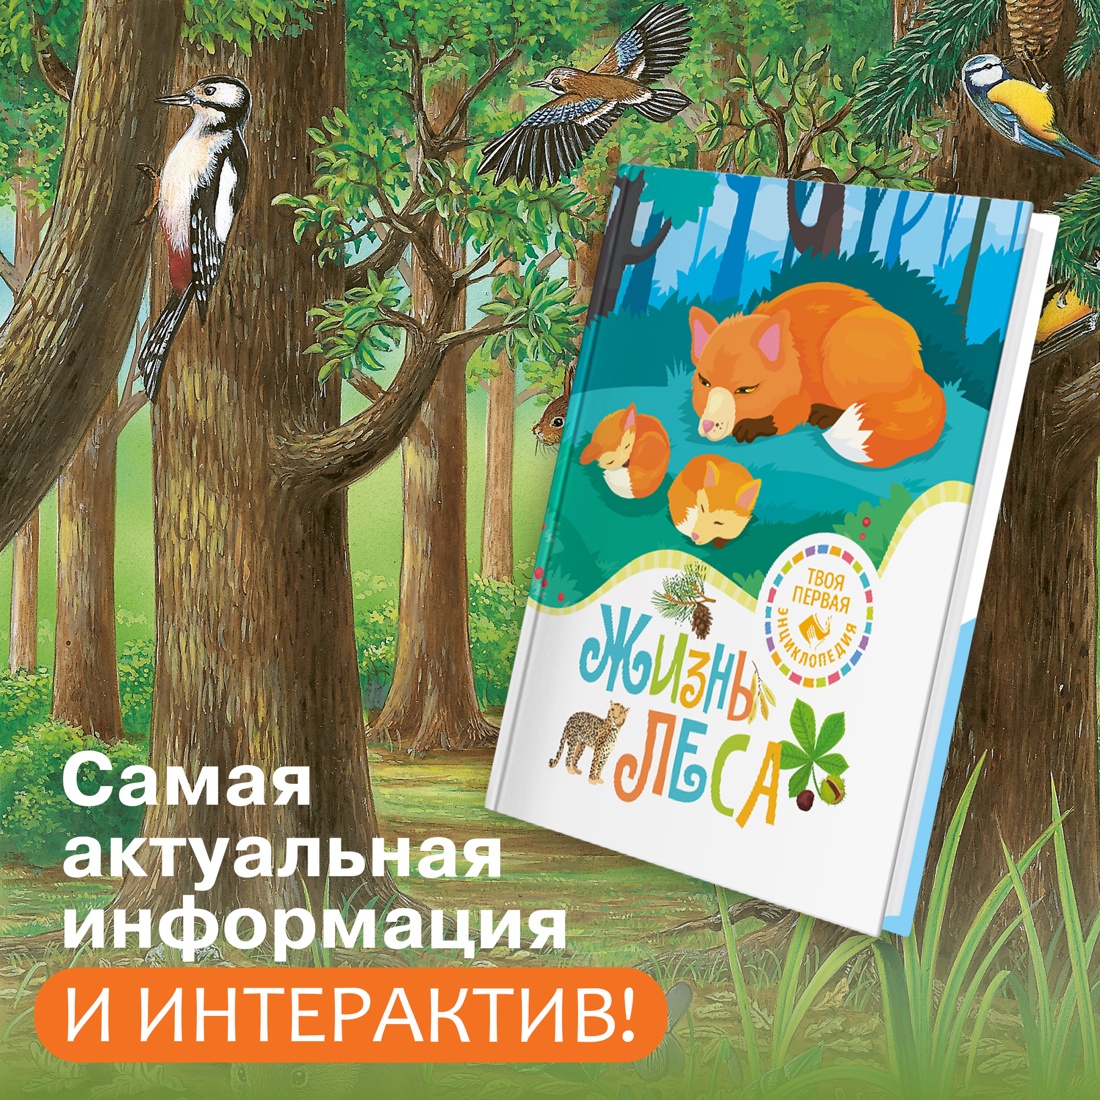 Промо материал к книге "Жизнь леса" №0